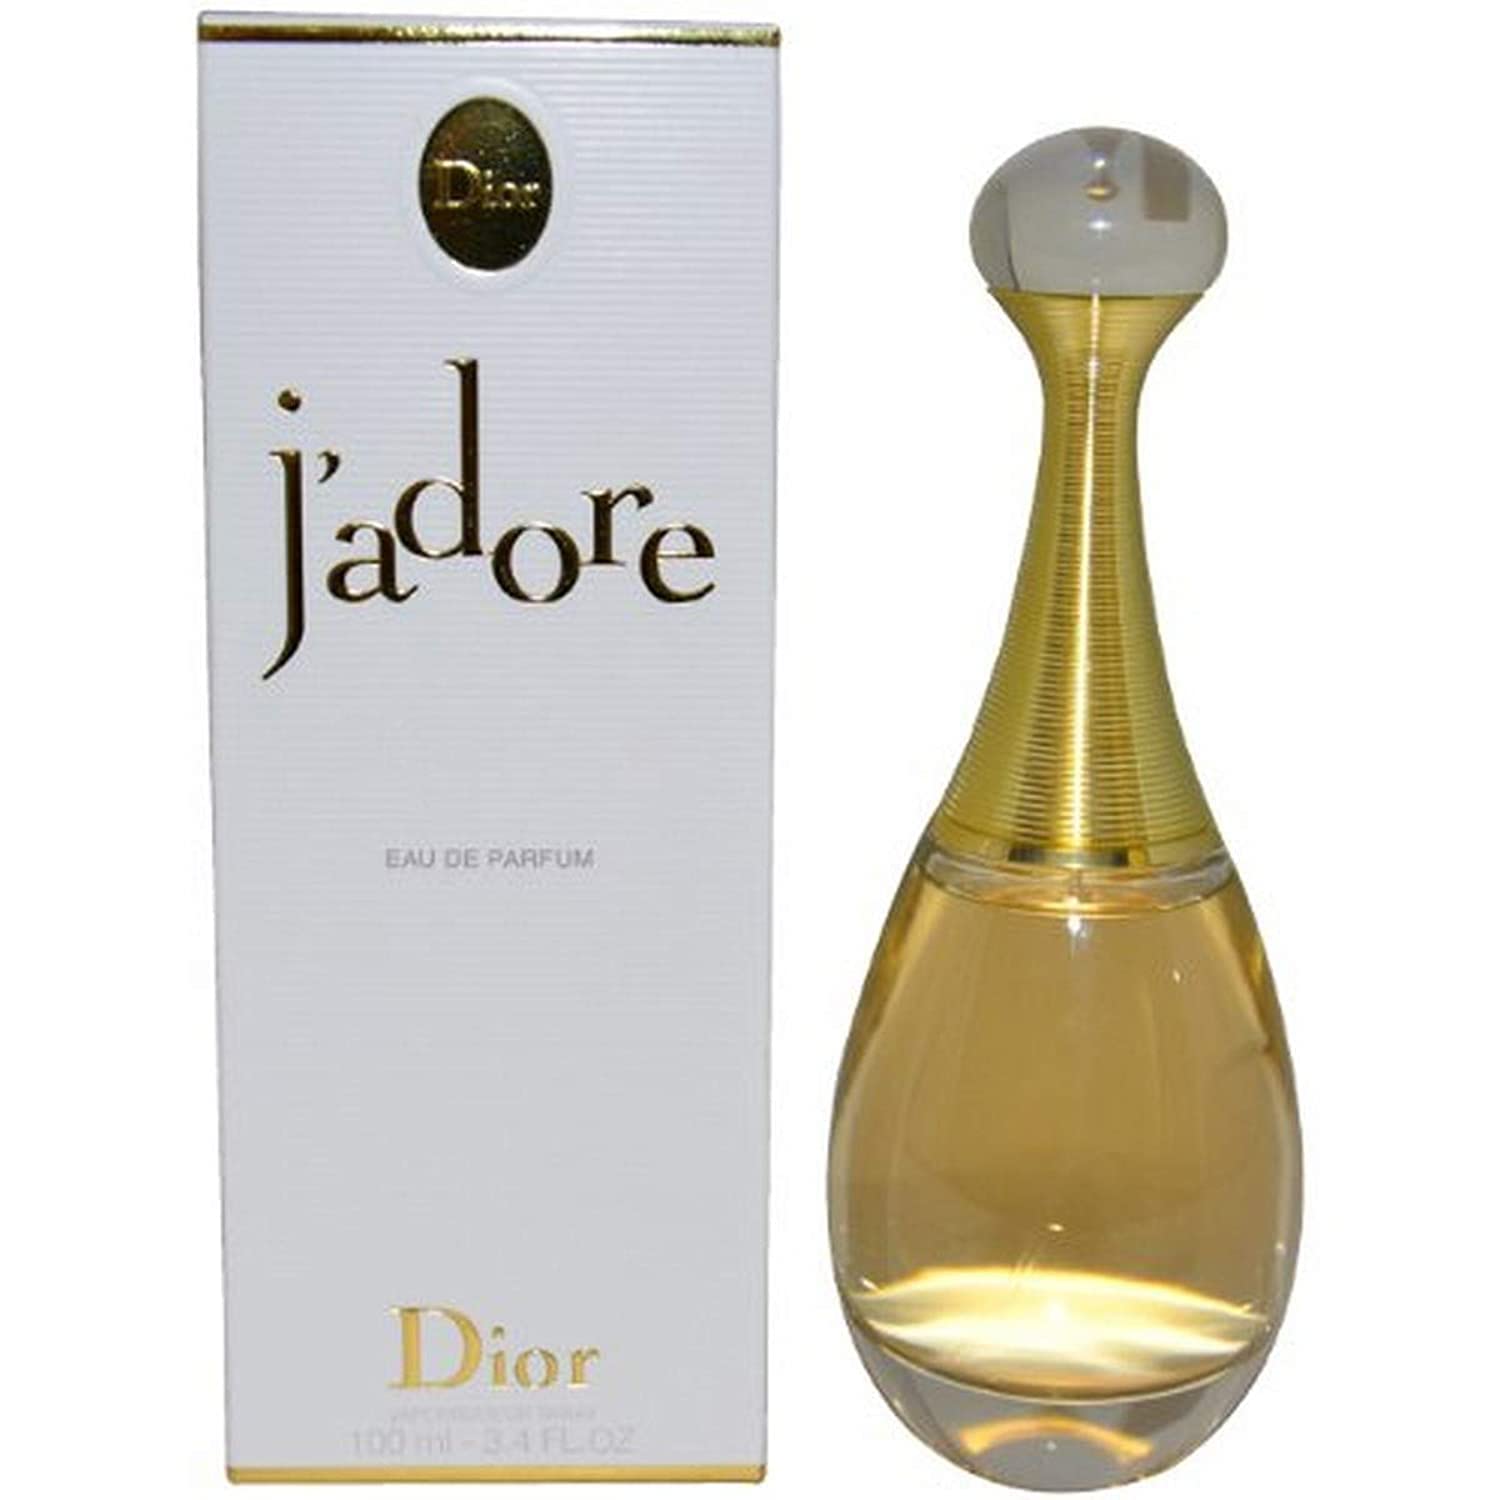 Nước Hoa Dior Jadore 30ml Eau de Parfum Chính Hãng